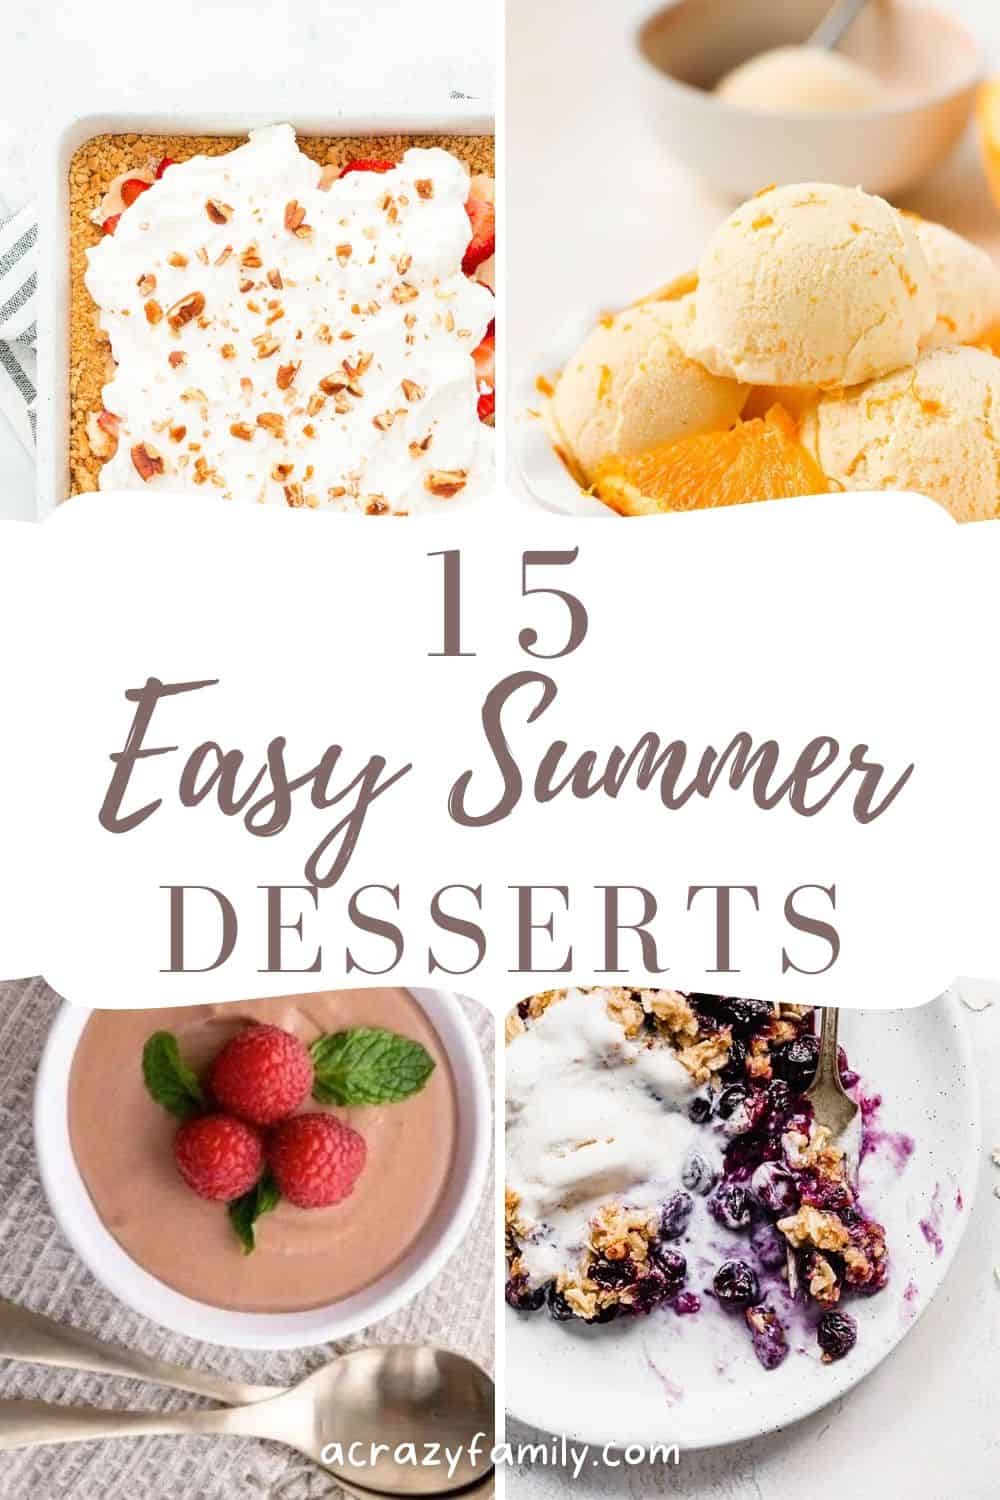 15 easy summer desserts pin